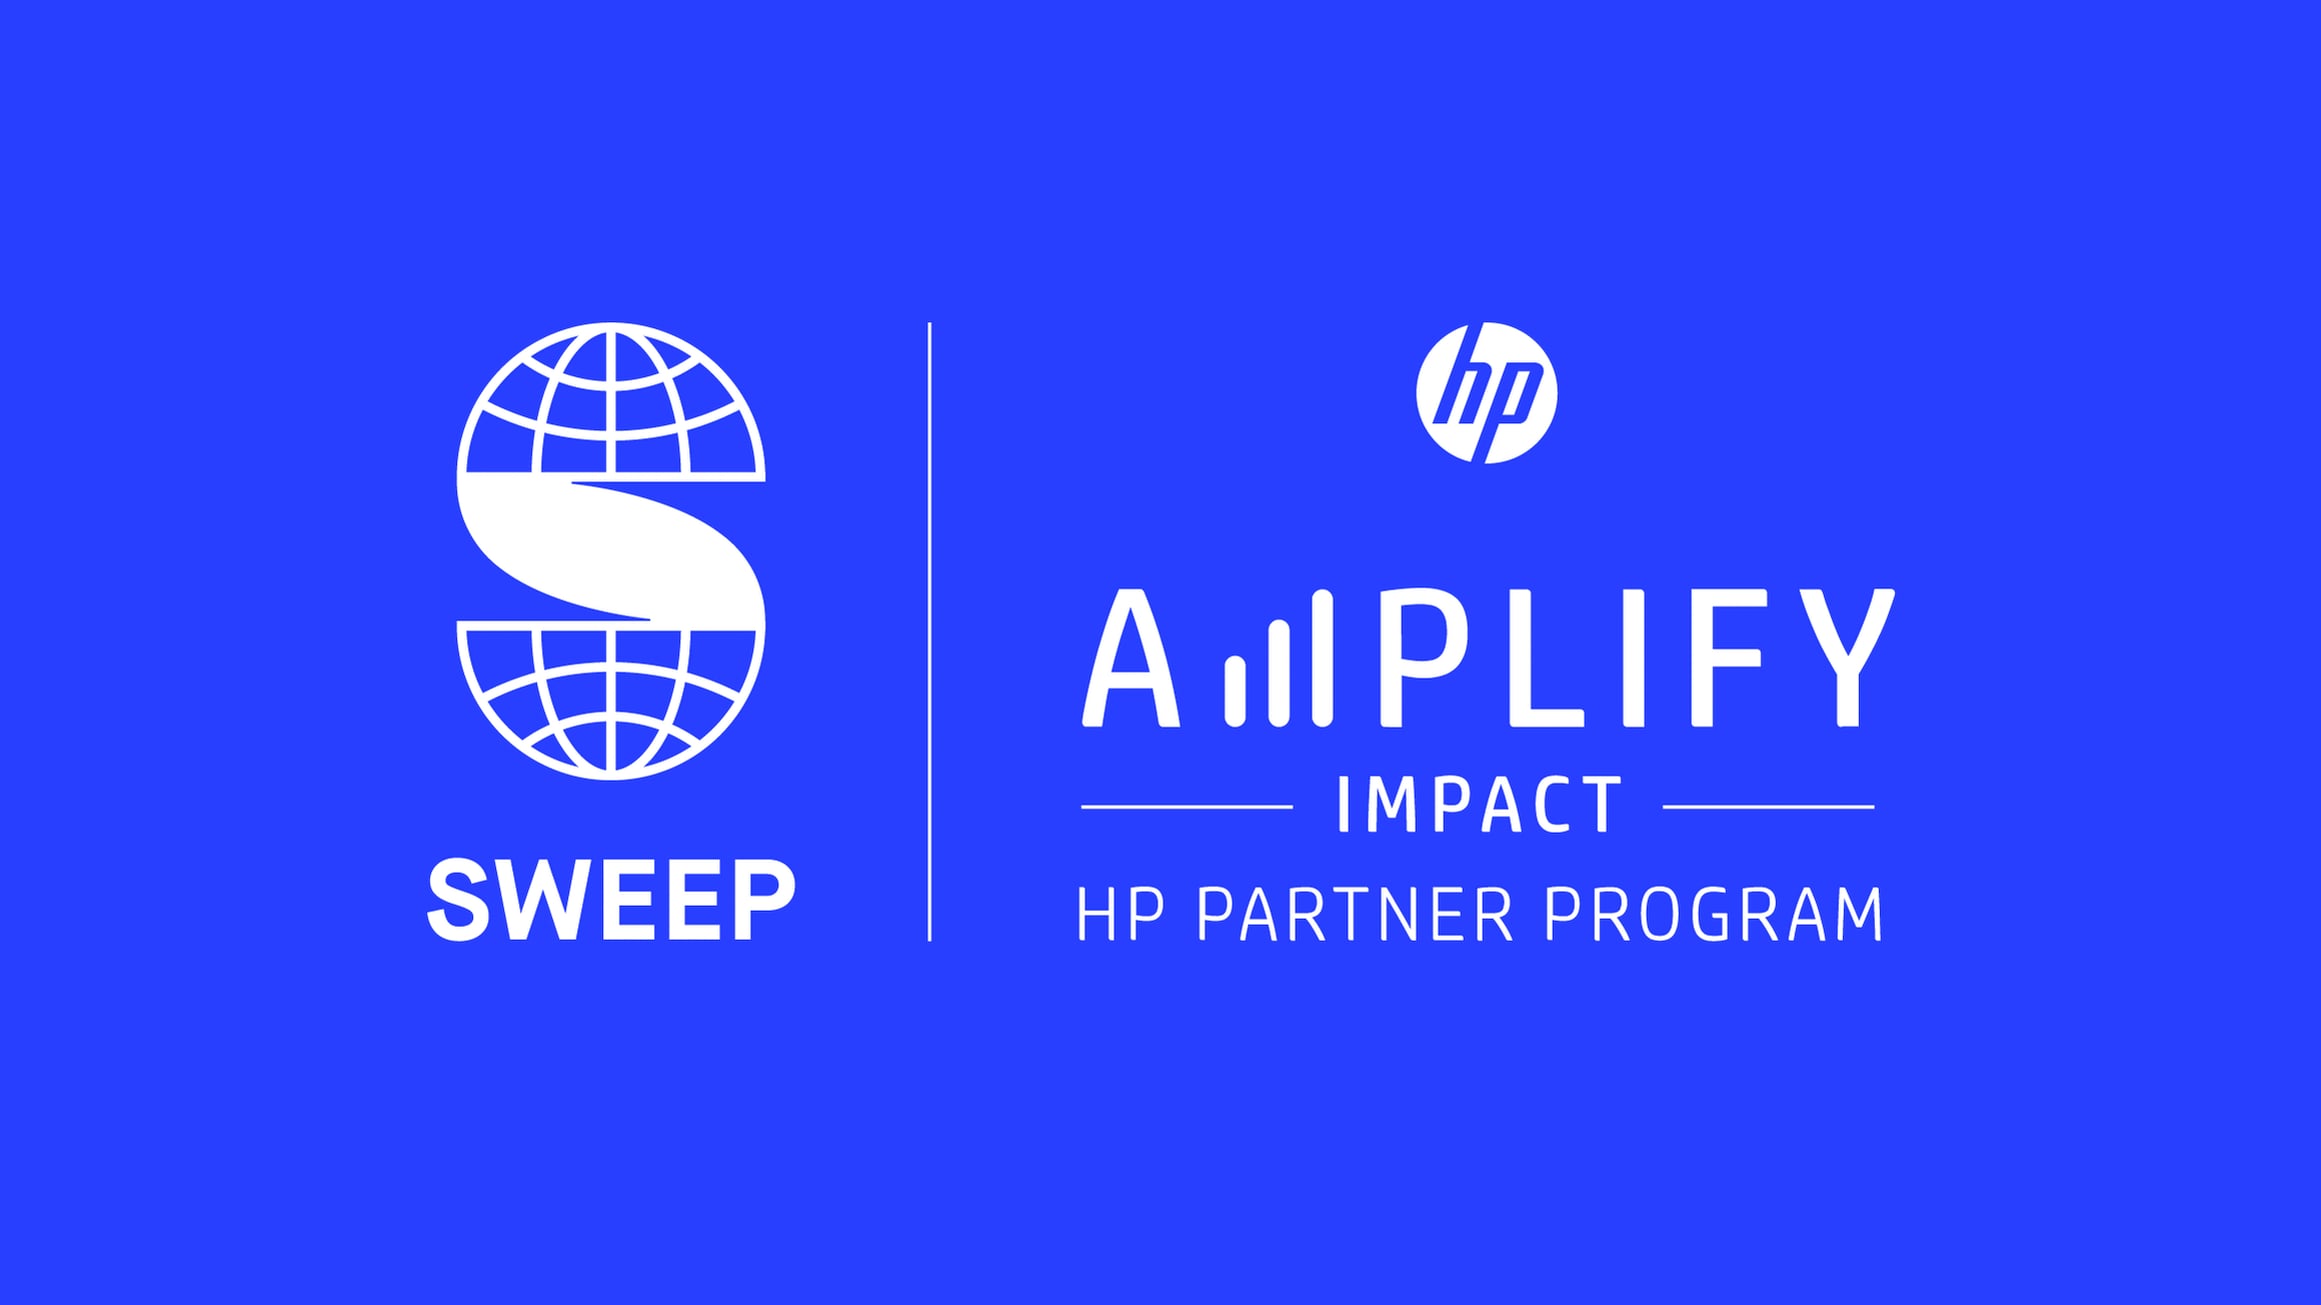 Hp Amplify Impact Partner Stories On Vimeo 3257